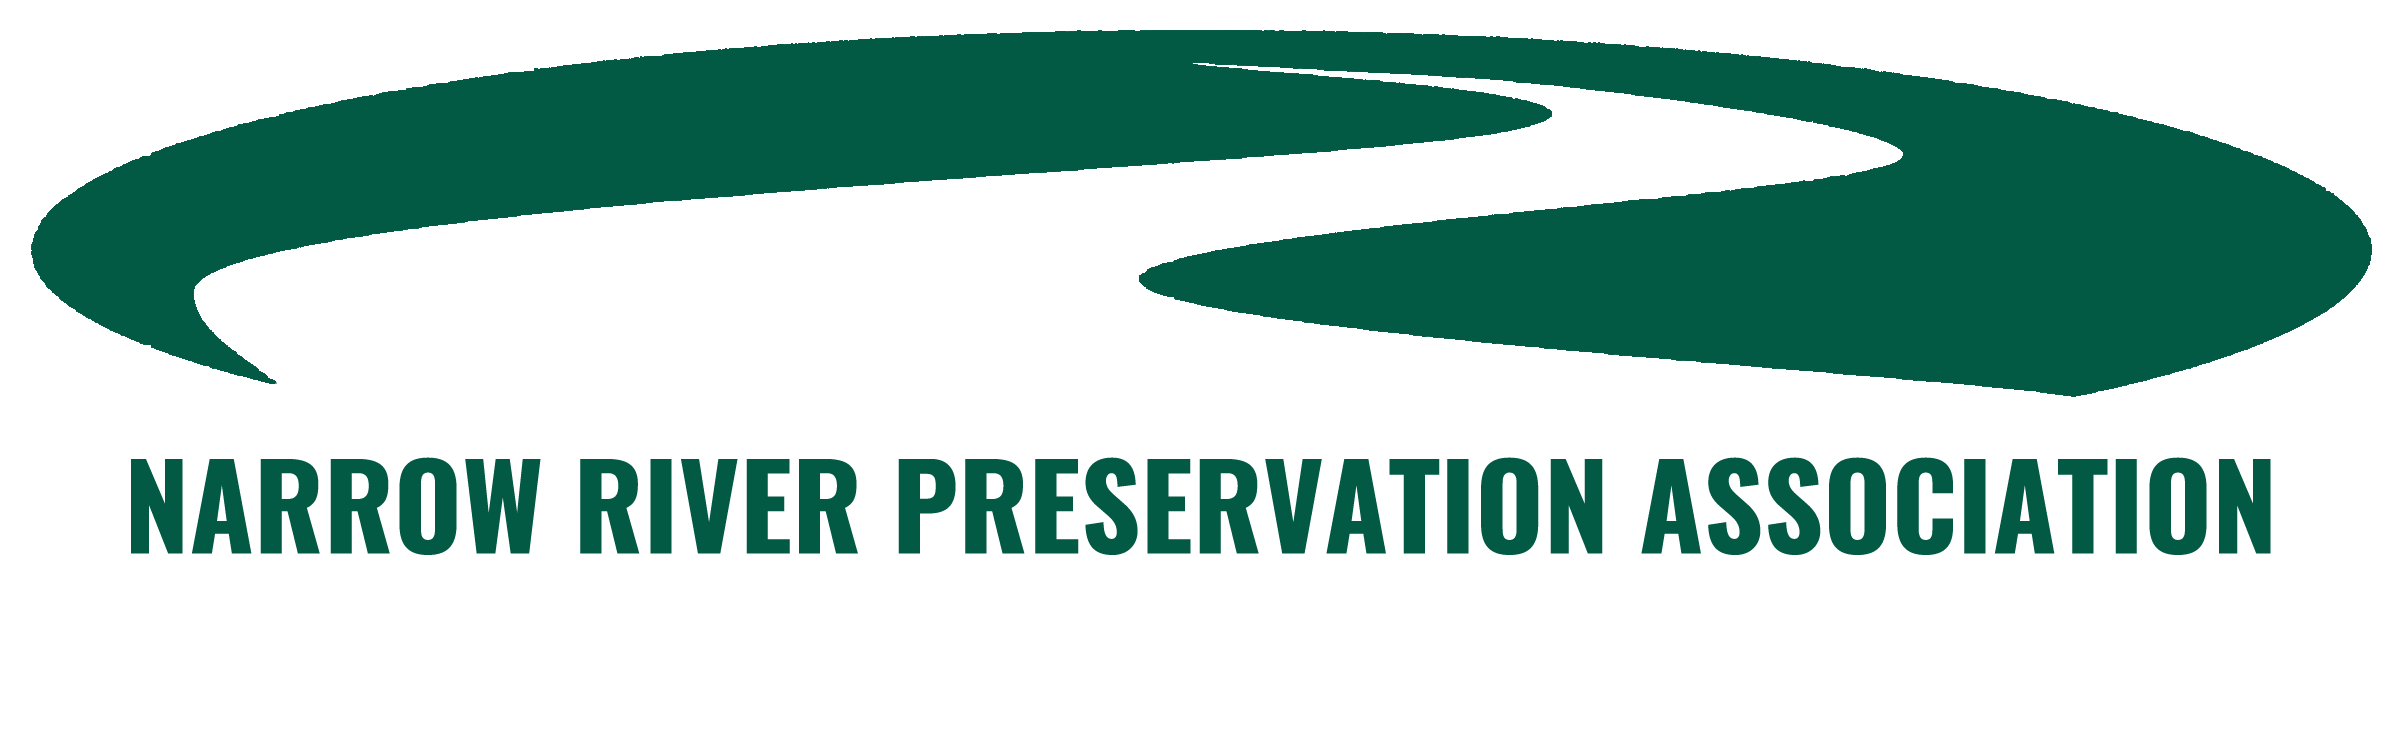 Narrow River Preservation Association logo